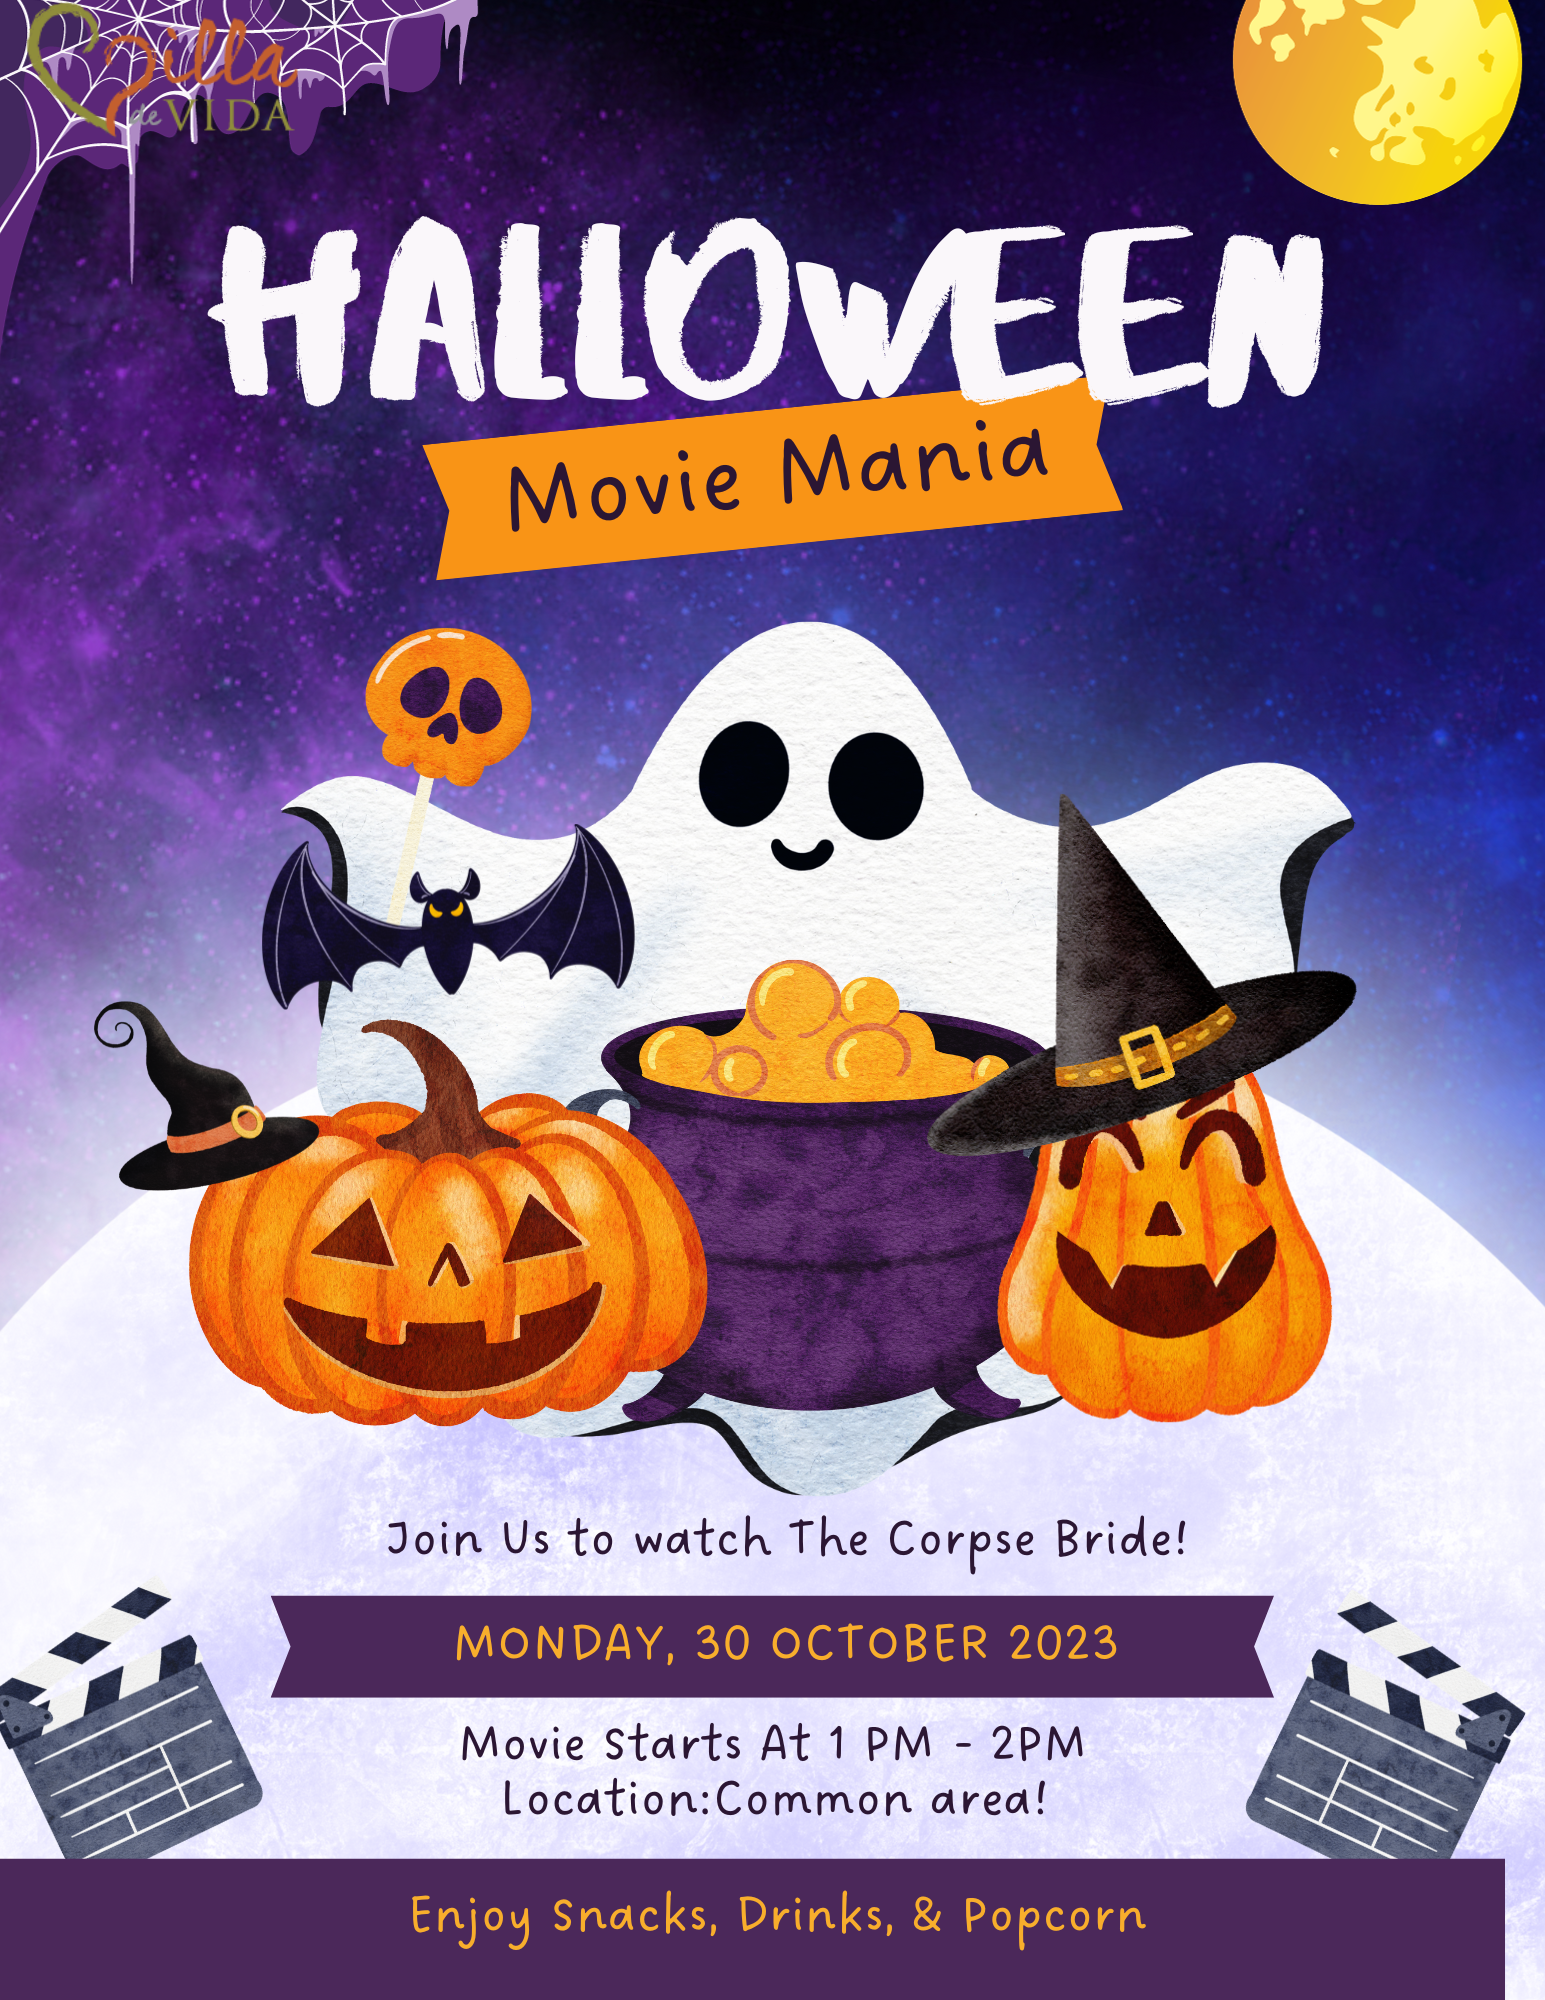 Halloween Movies Cinema Party 2023 by JosephPlus2001 on DeviantArt